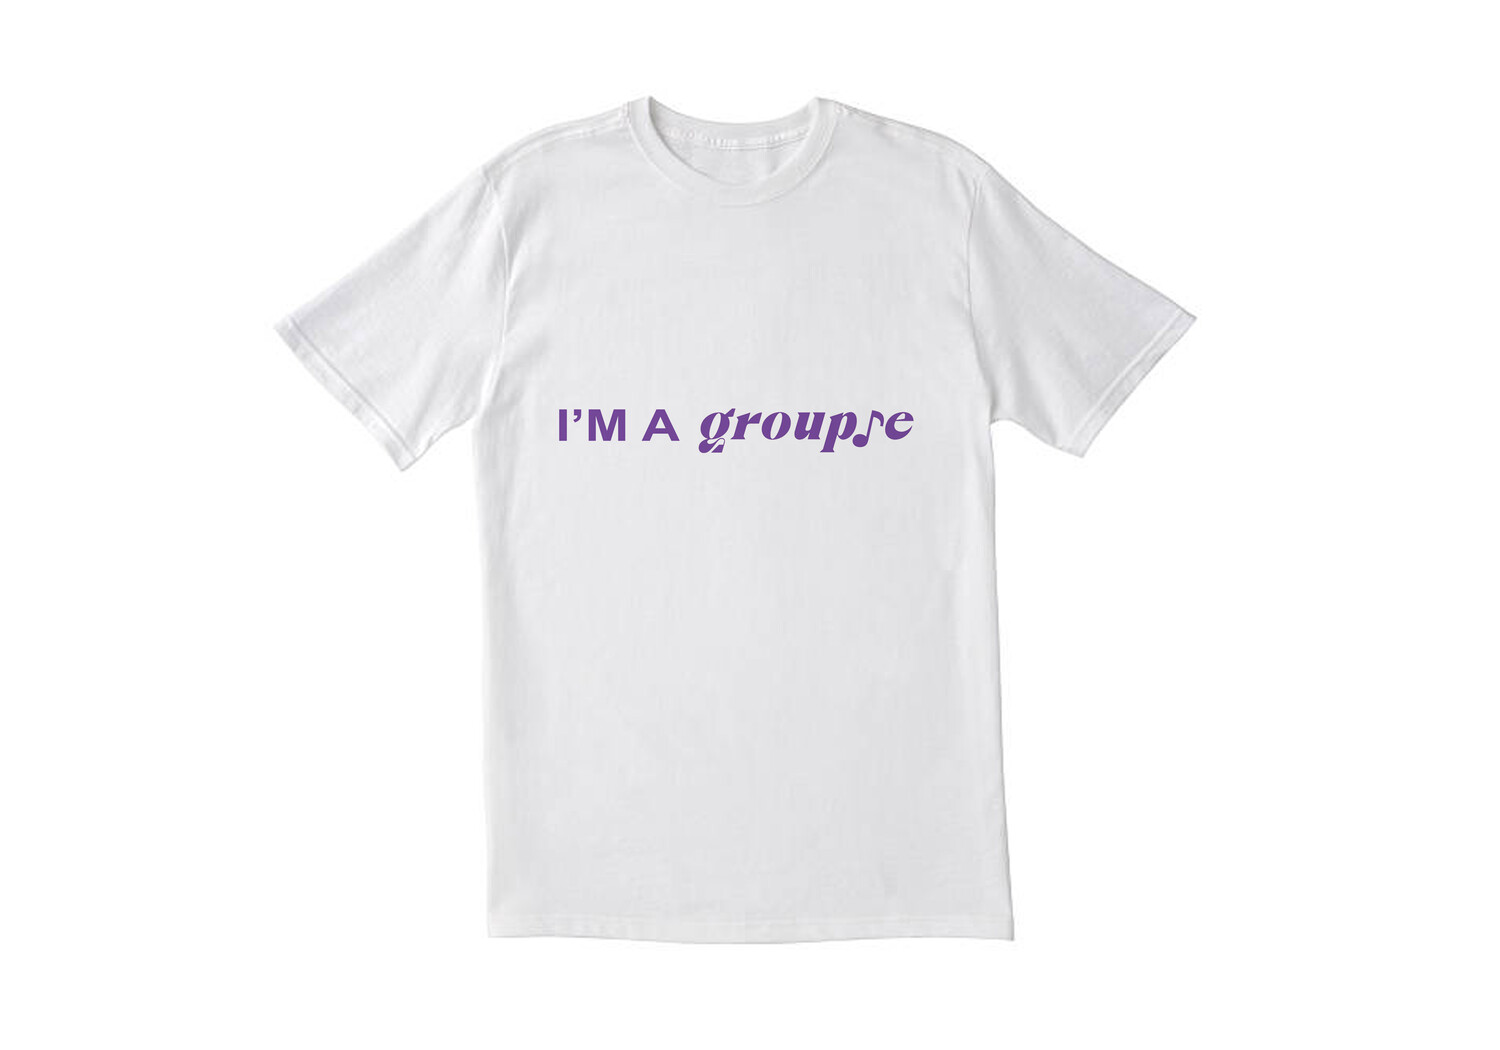 "I'm a groupie" T-shirt